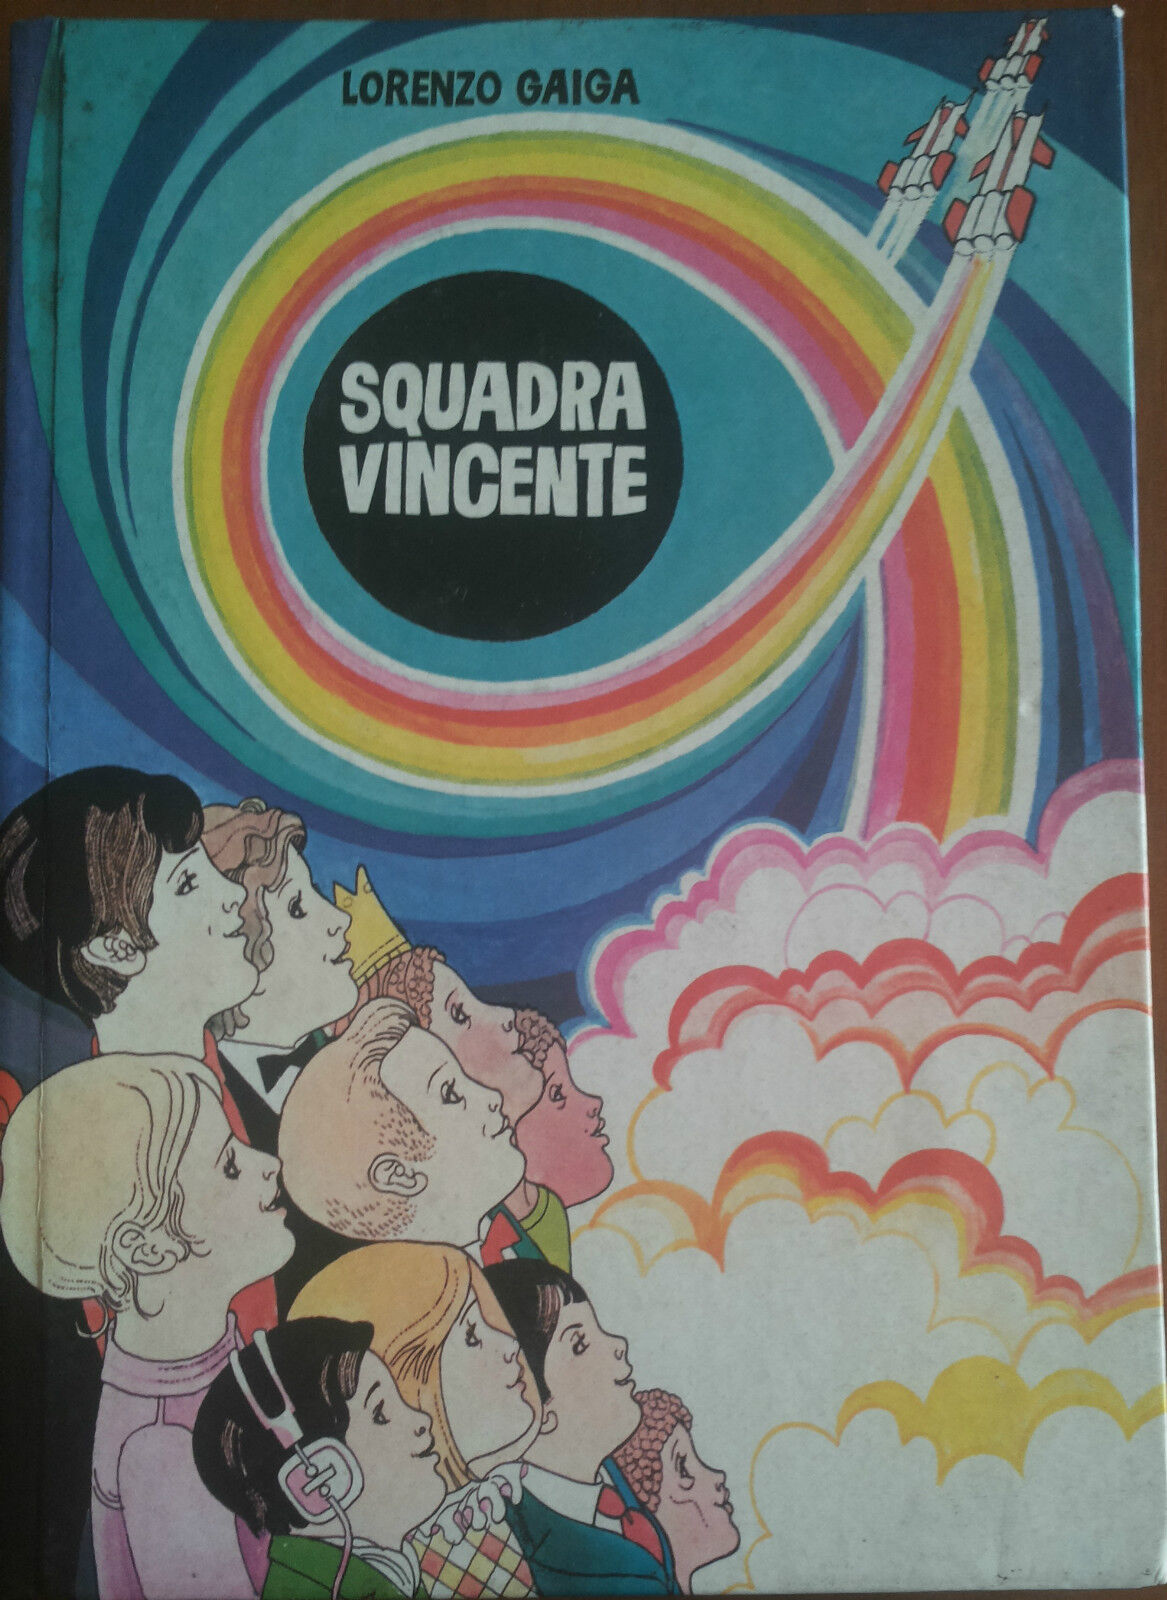 Squadra vincente - Lorenzo Gaiga - Missionaria italiana,1976 - A